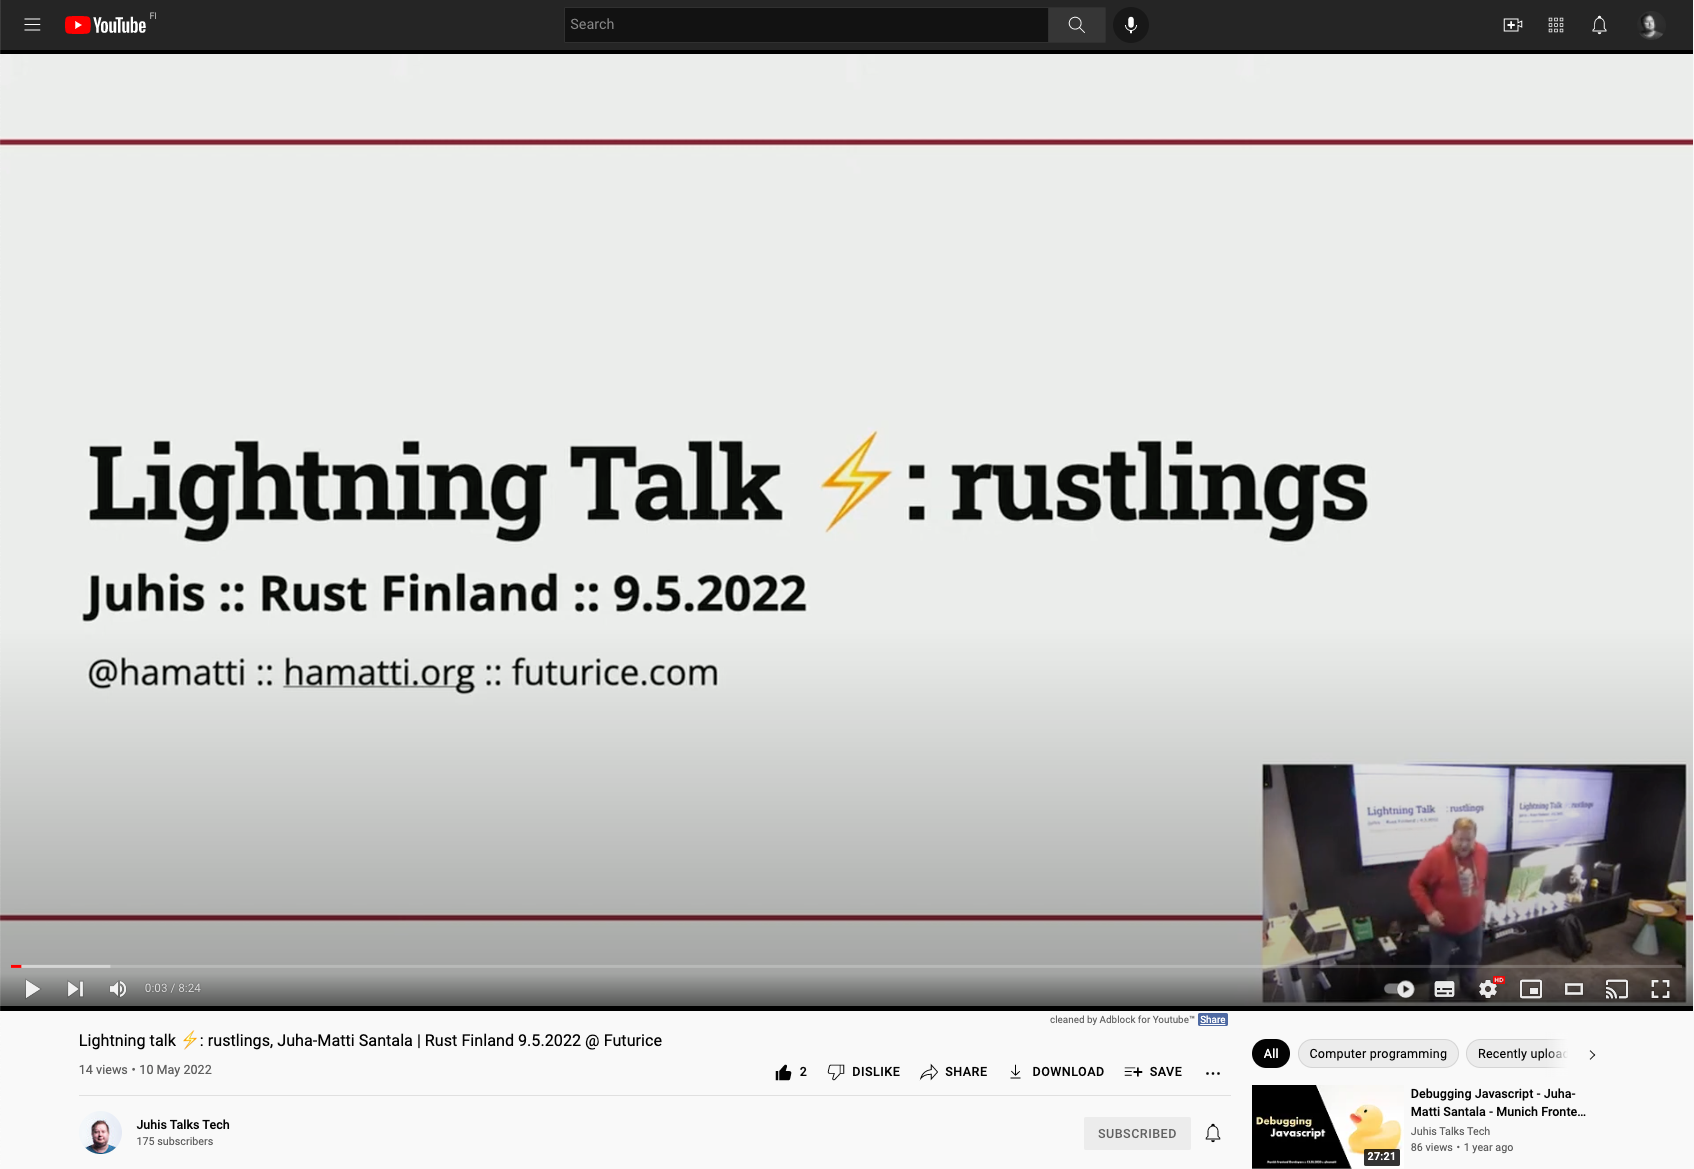 Youtube screenshot showing video "Lightning talk: rustlings, Juha-Matti Santala" from channel "Juhis Talks Tech"